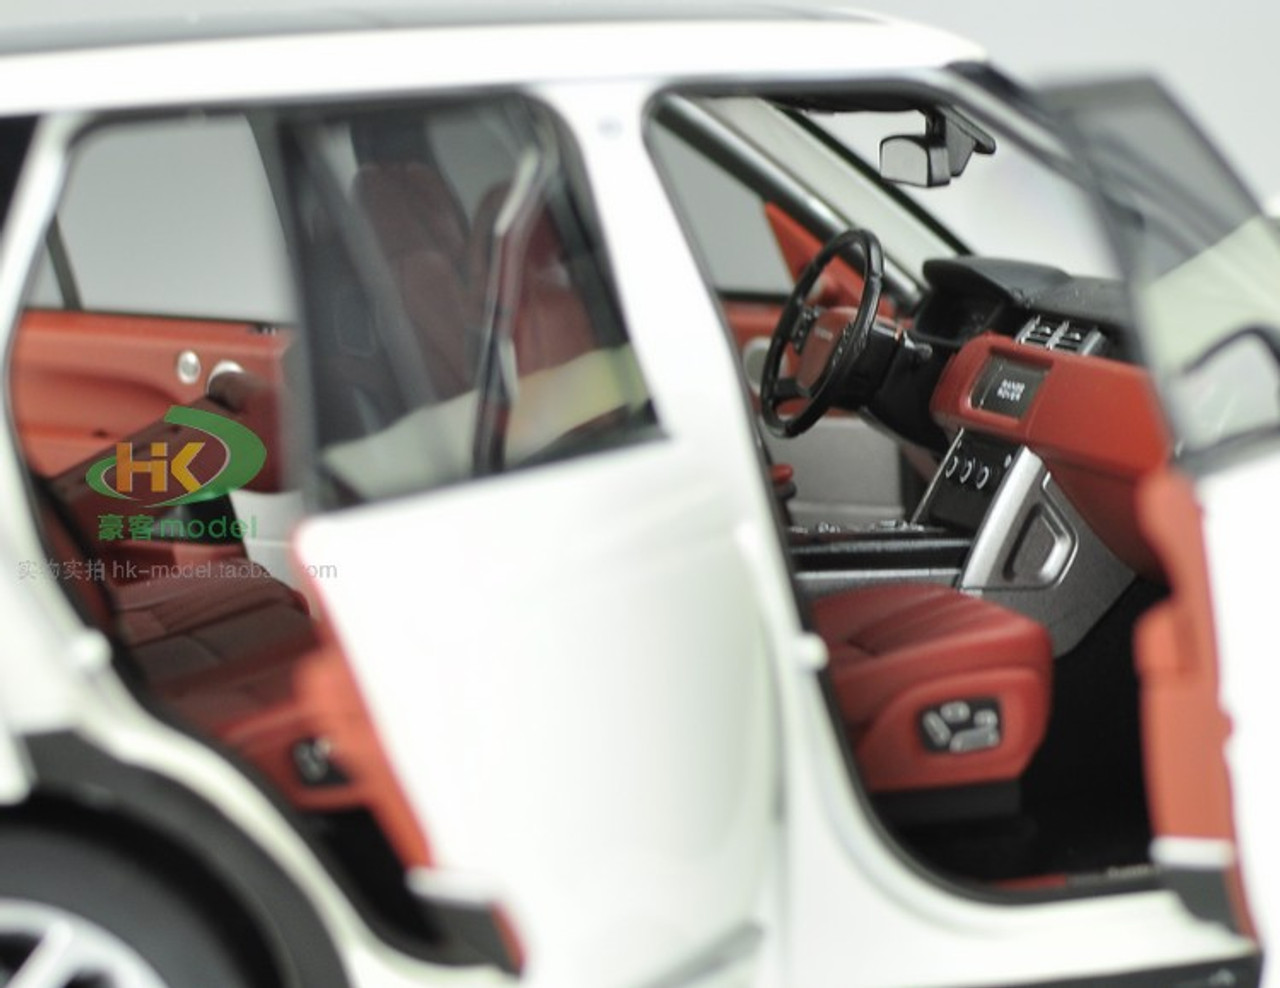 1/18 GTA GTAutos Land Rover Range Rover 4th Generation (2013-Present) (White) Diecast Car Model